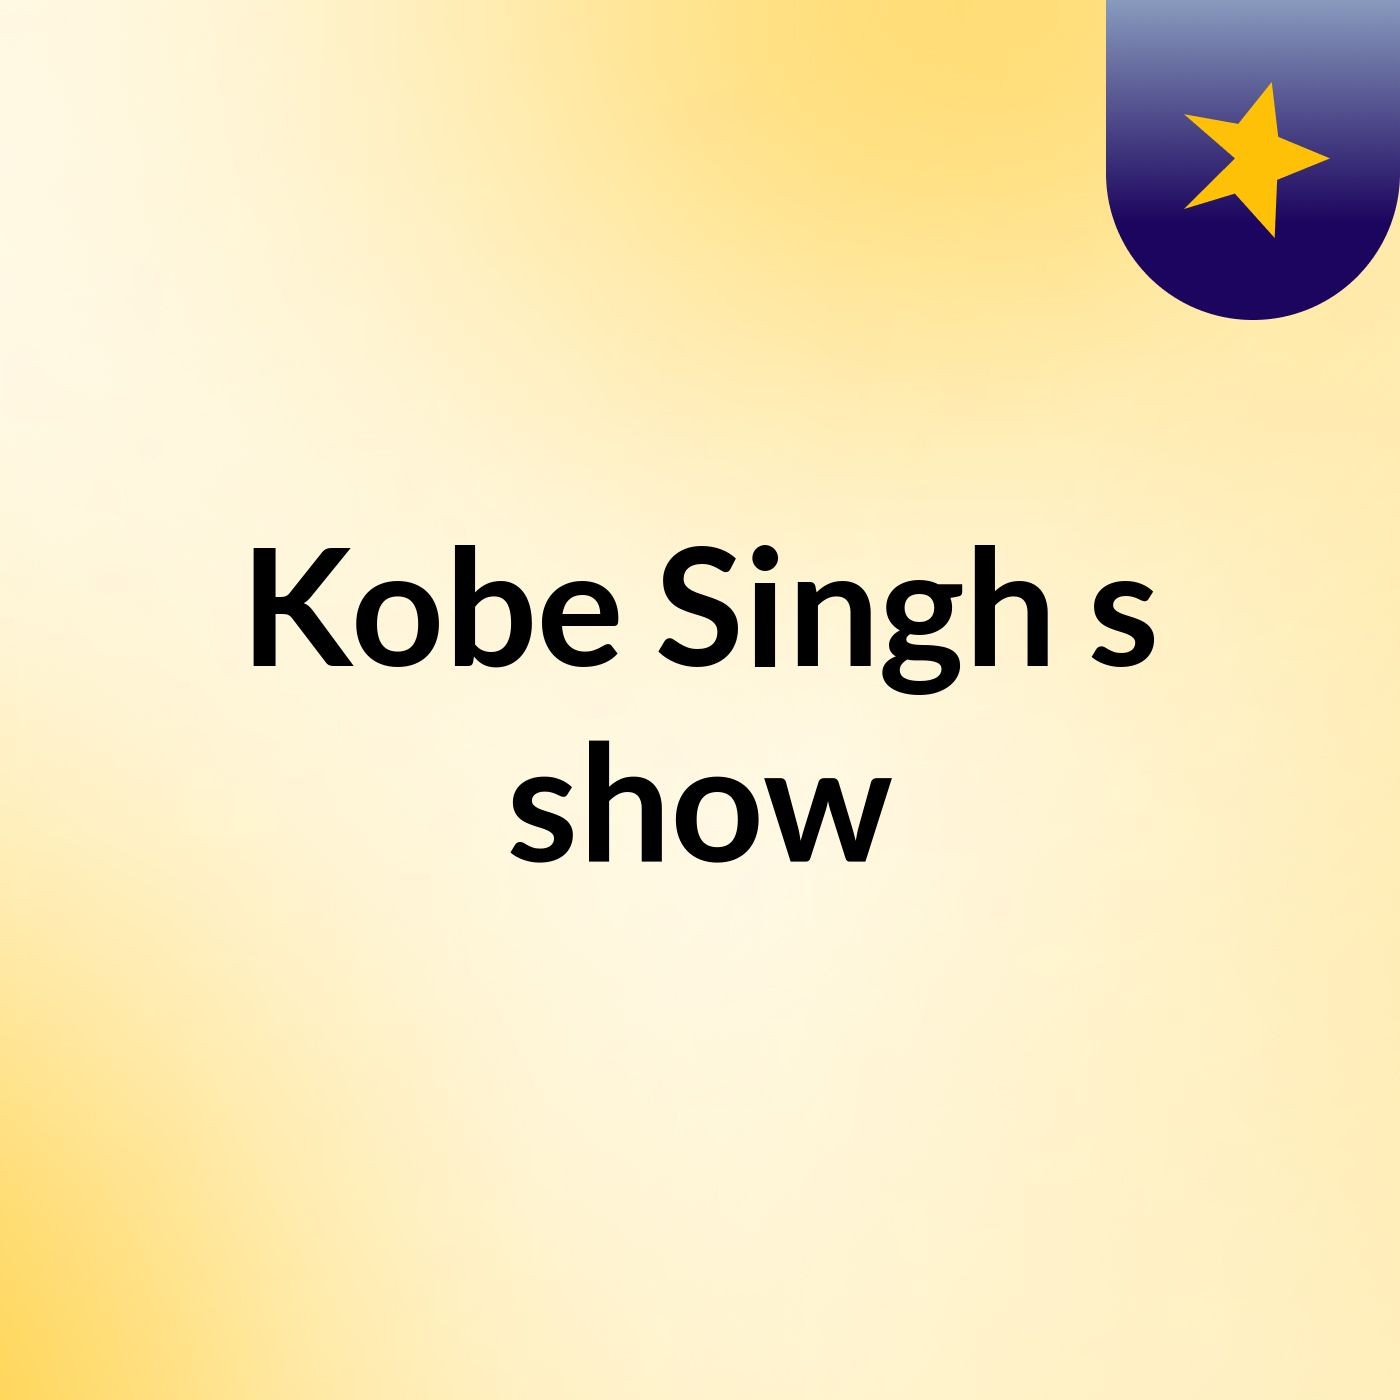 Kobe Singh's show